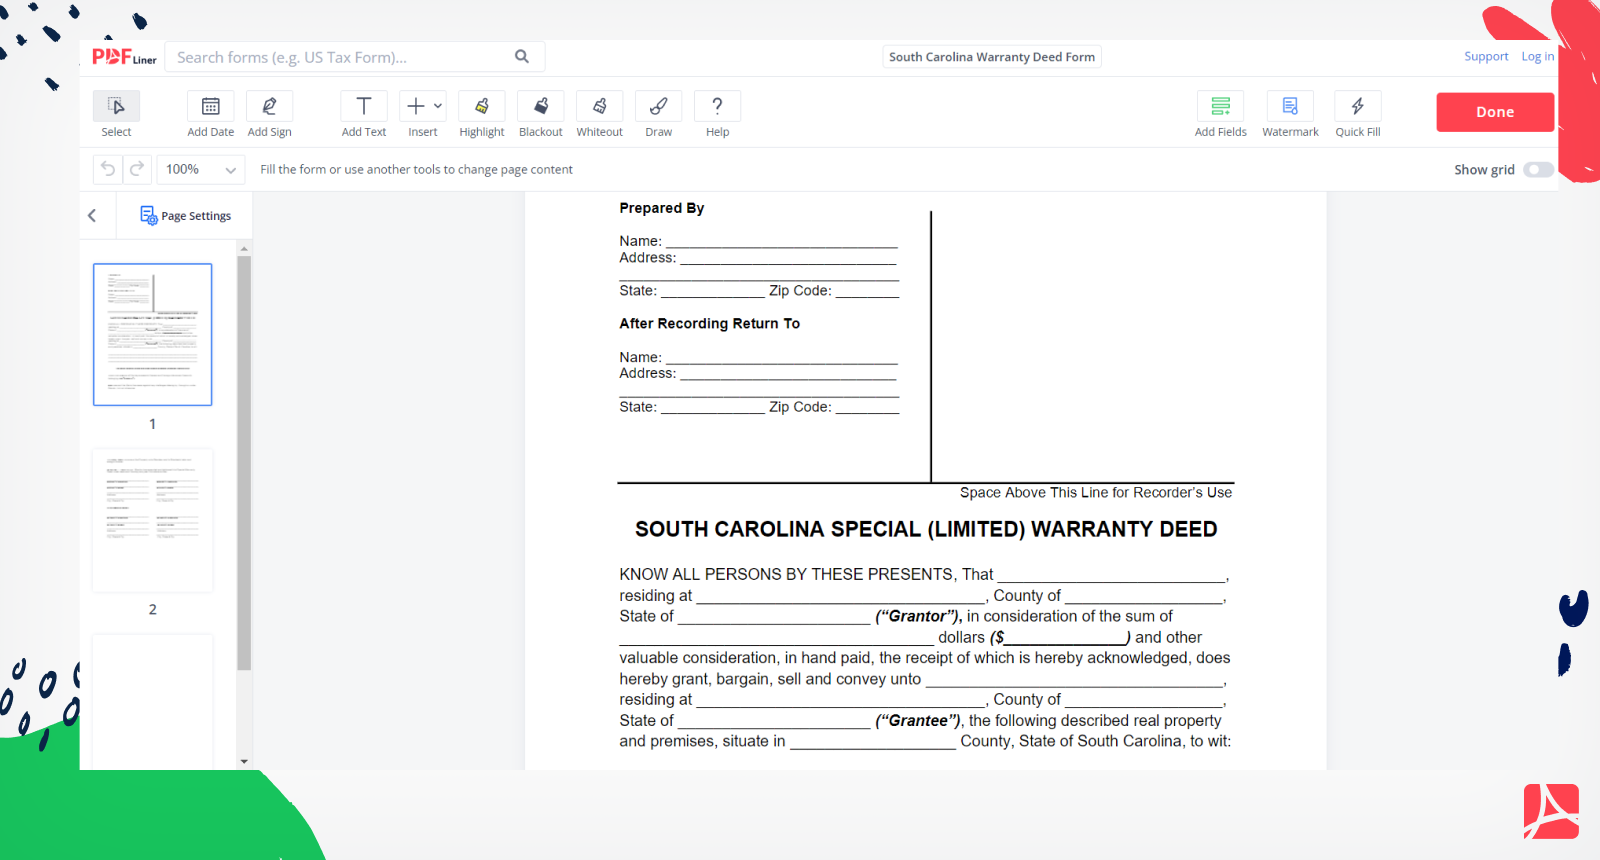 South Carolina Warranty Deed Form Screenshot